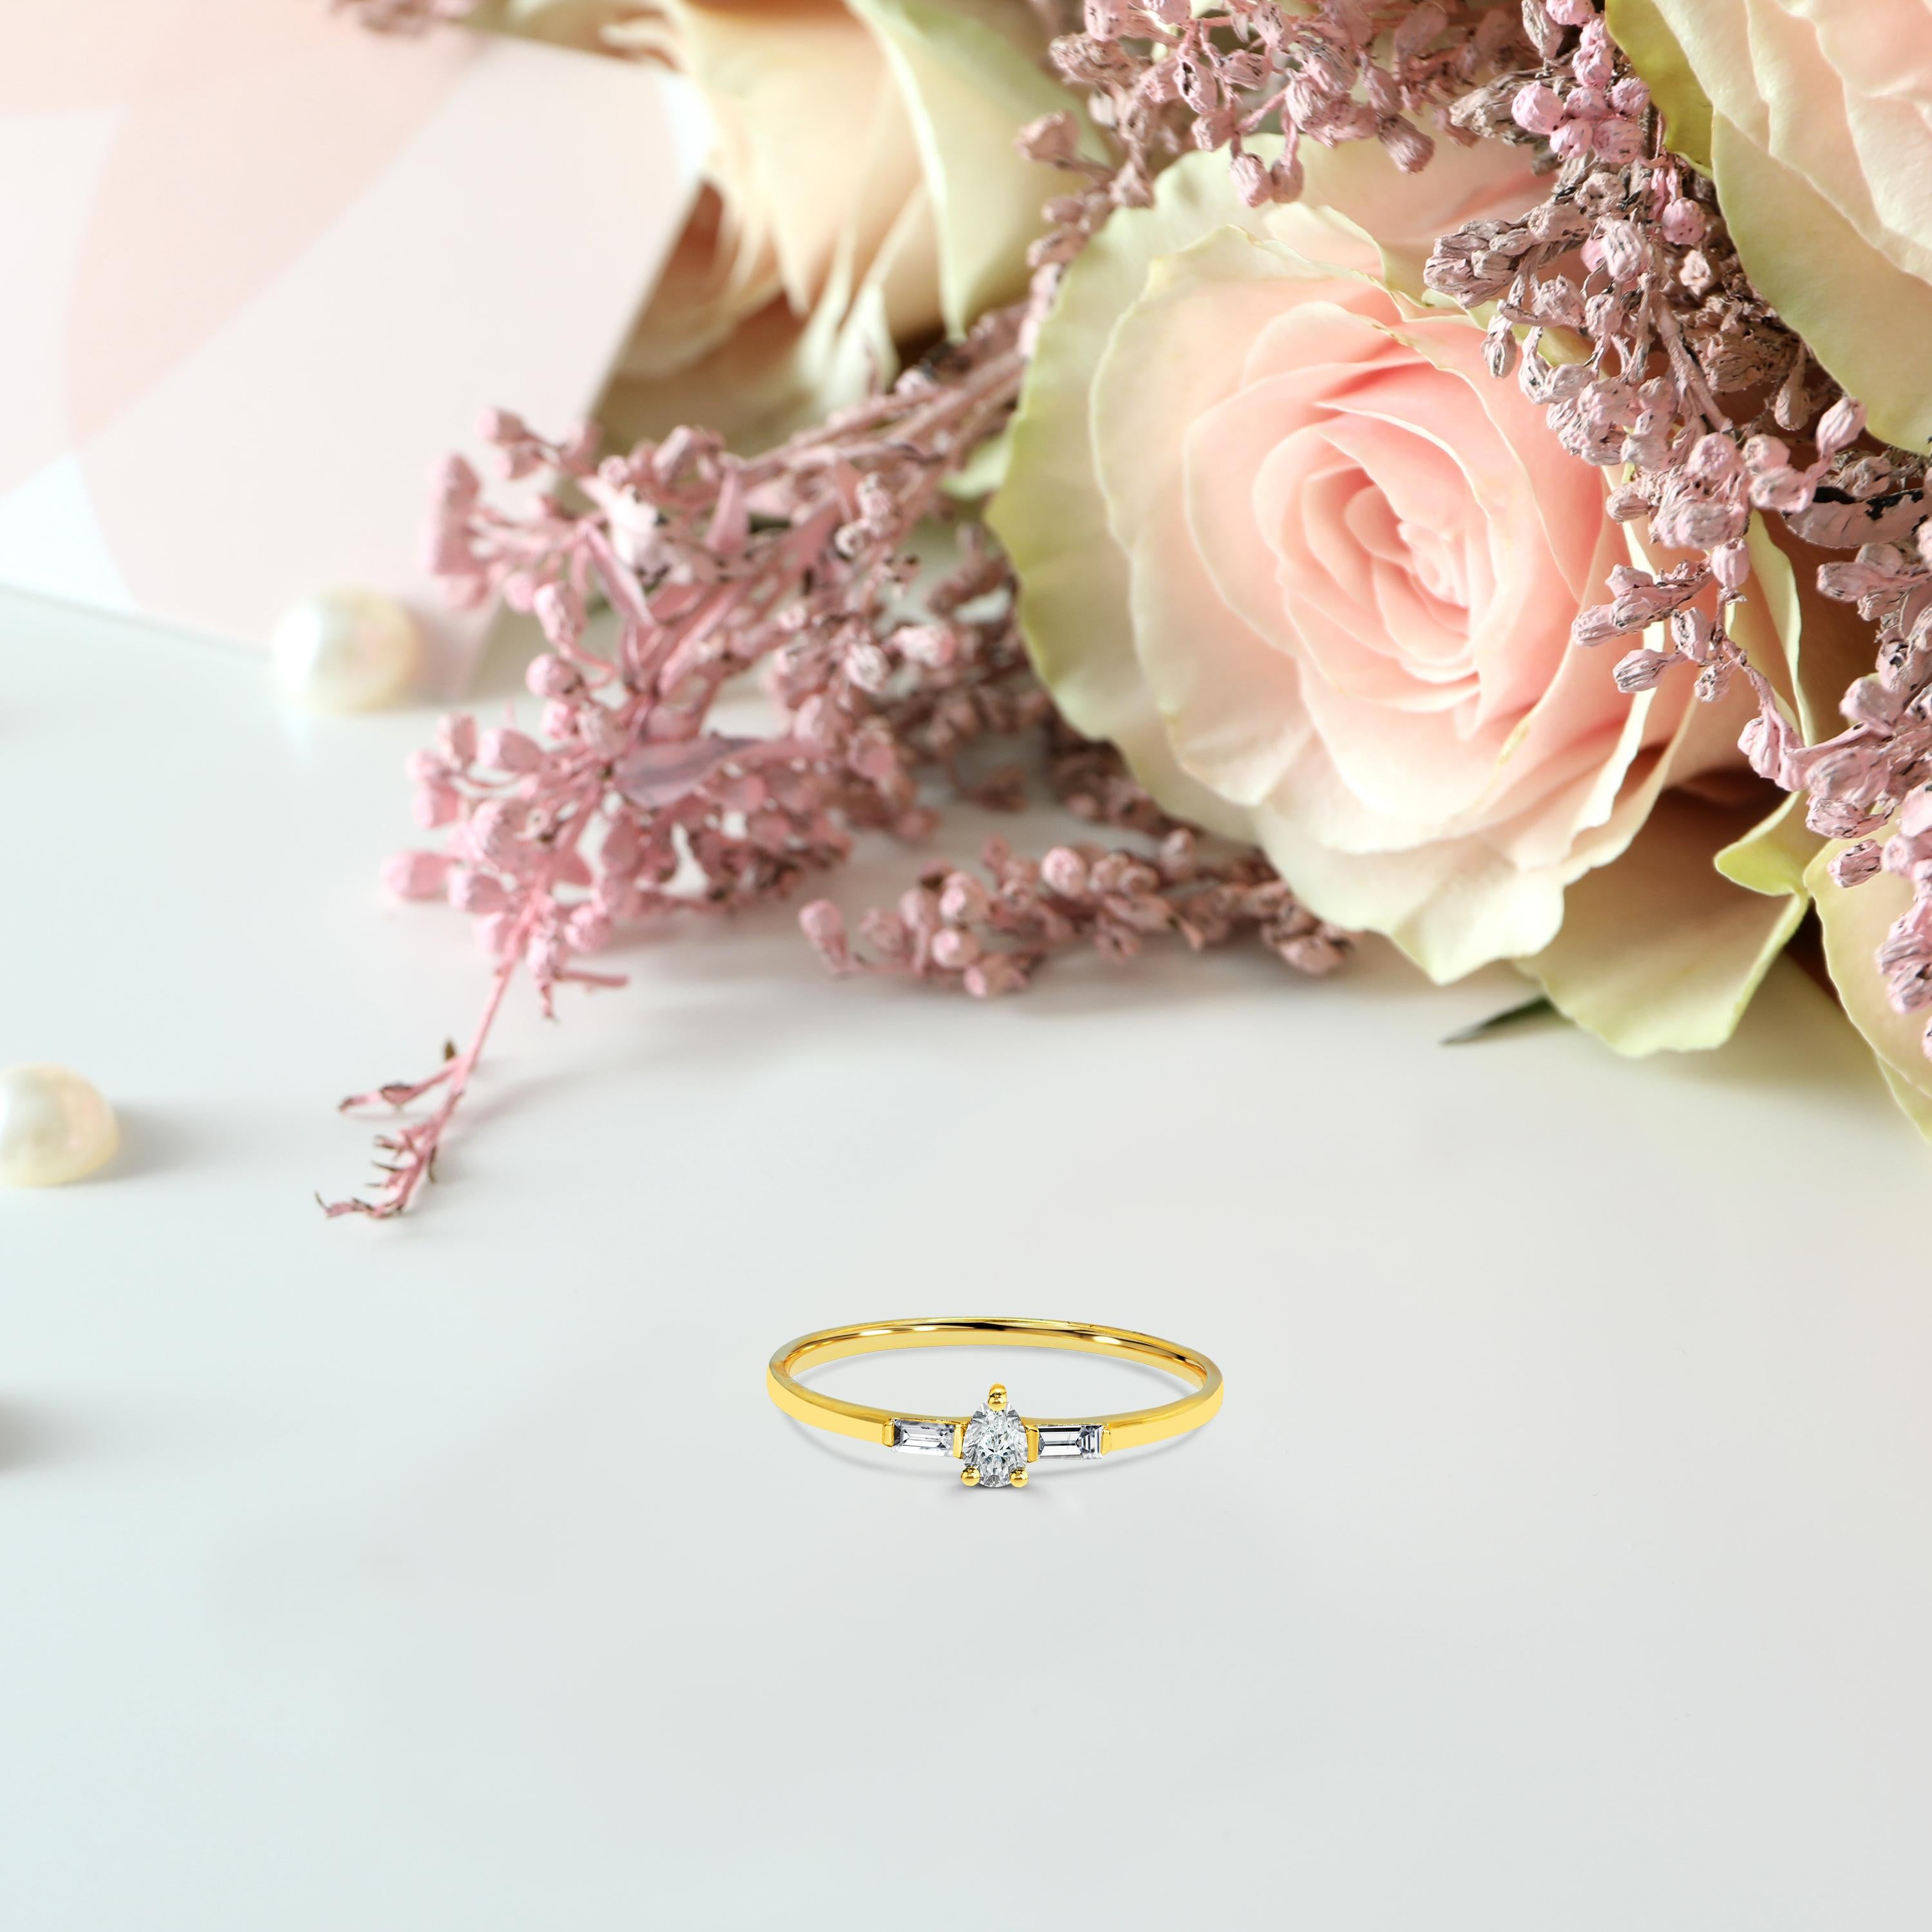 For Sale:  14k Gold Diamond Ring Pear Cut Diamond Ring Baguette Diamond Ring 6